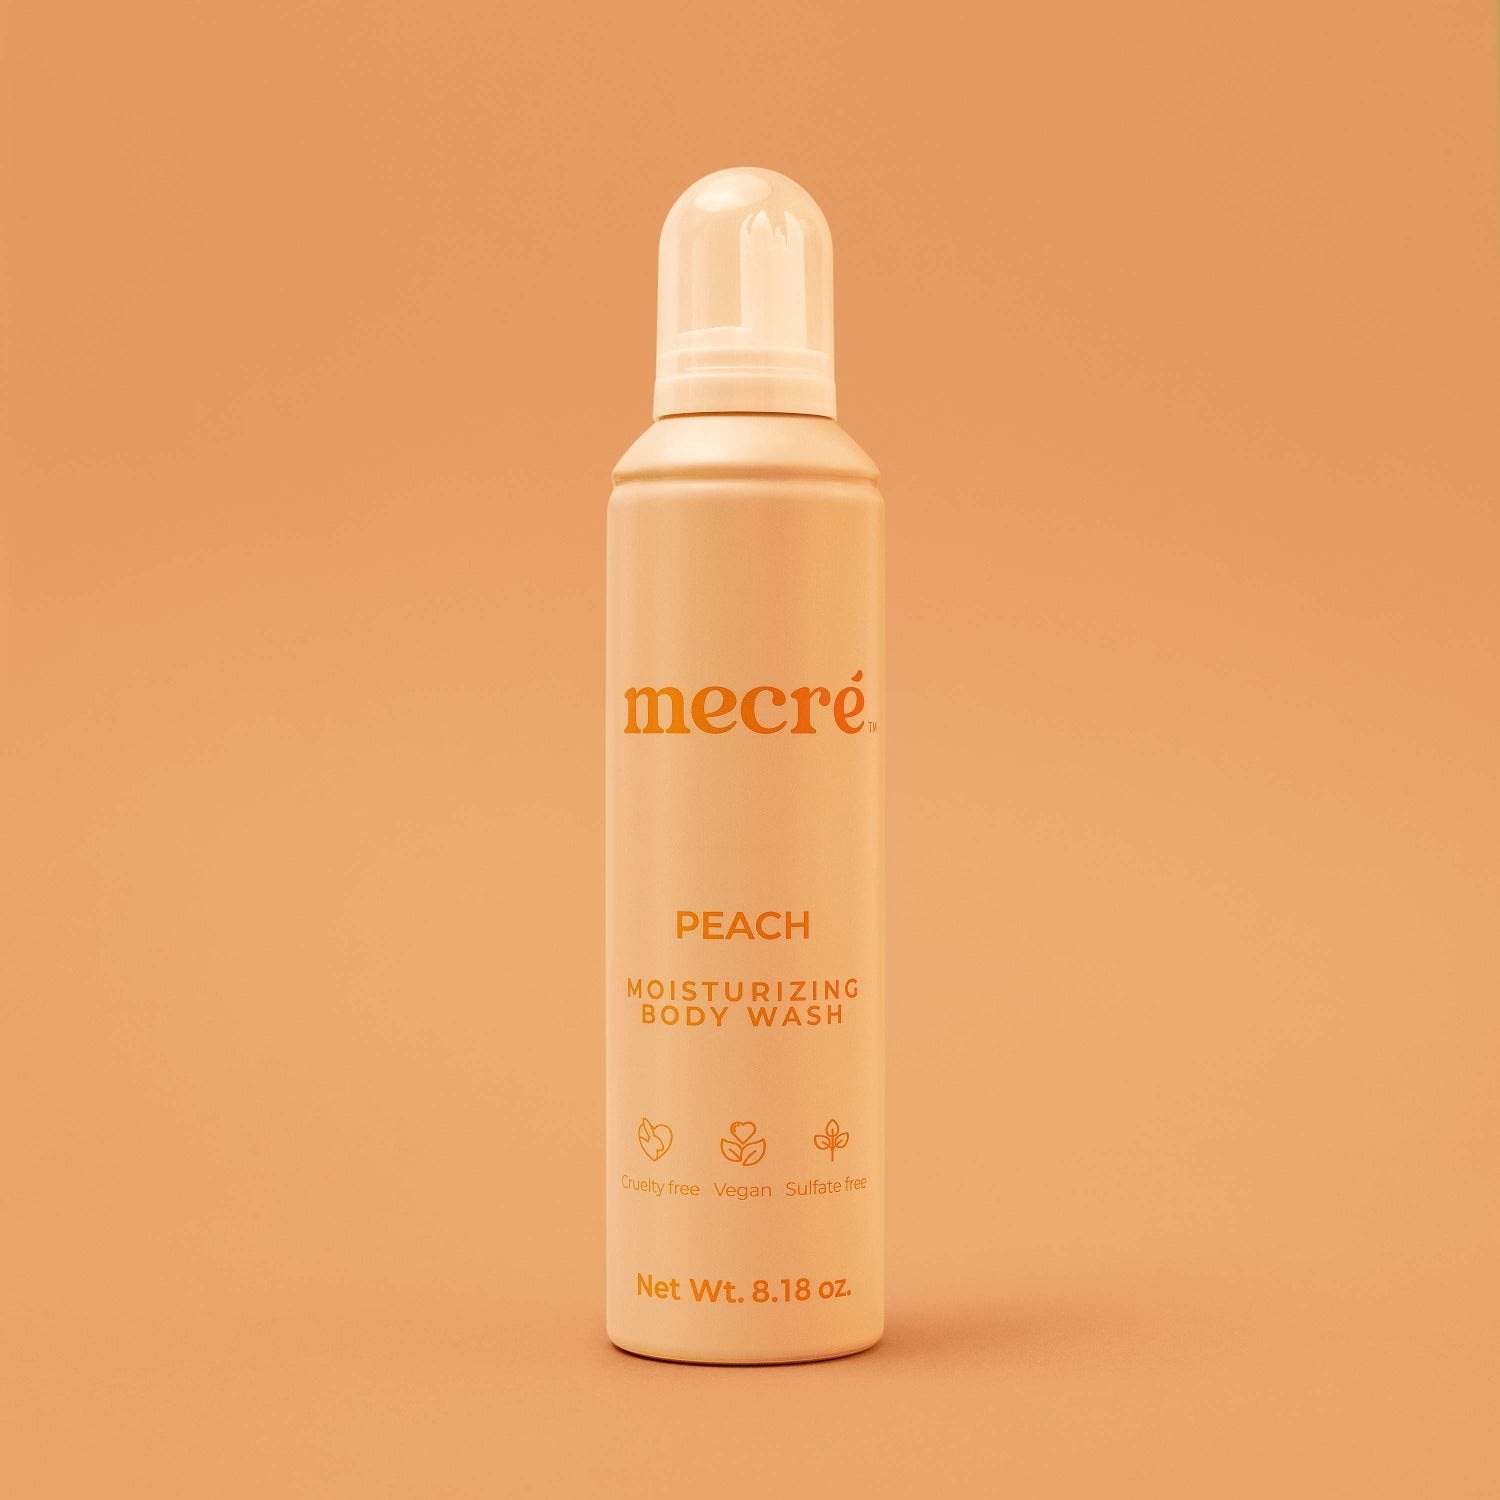 Front view of Mecré moisturizing body wash bottle in peach scent, featuring a light orange bottle.